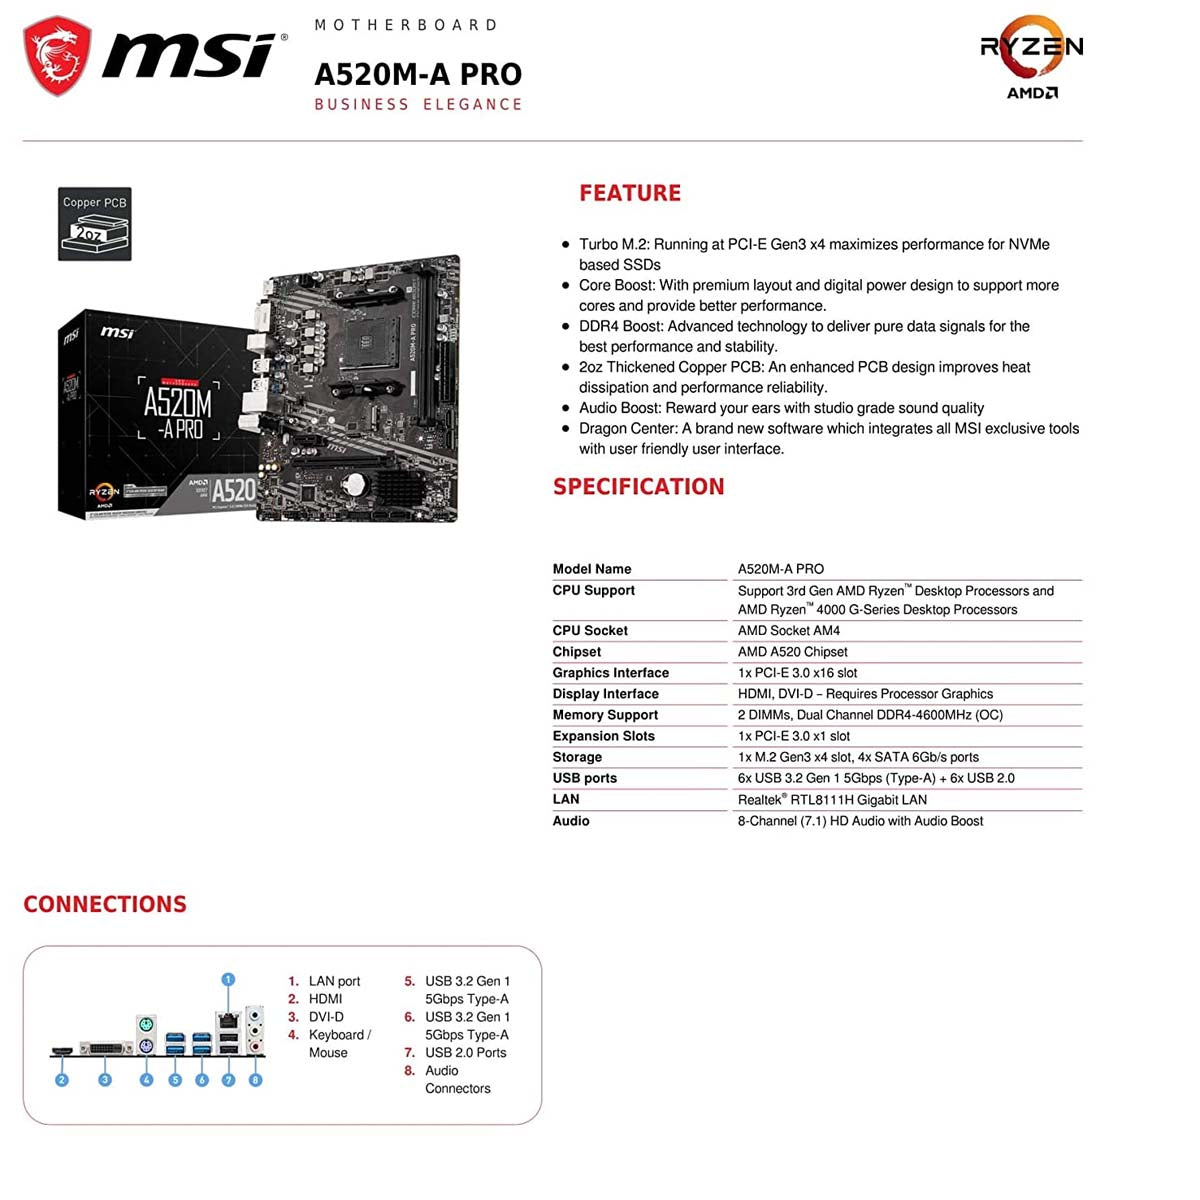 MSI A520M-A PRO AMD AM4 mATX मदरबोर्ड कोर बूस्ट और ऑडियो बूस्ट के साथ